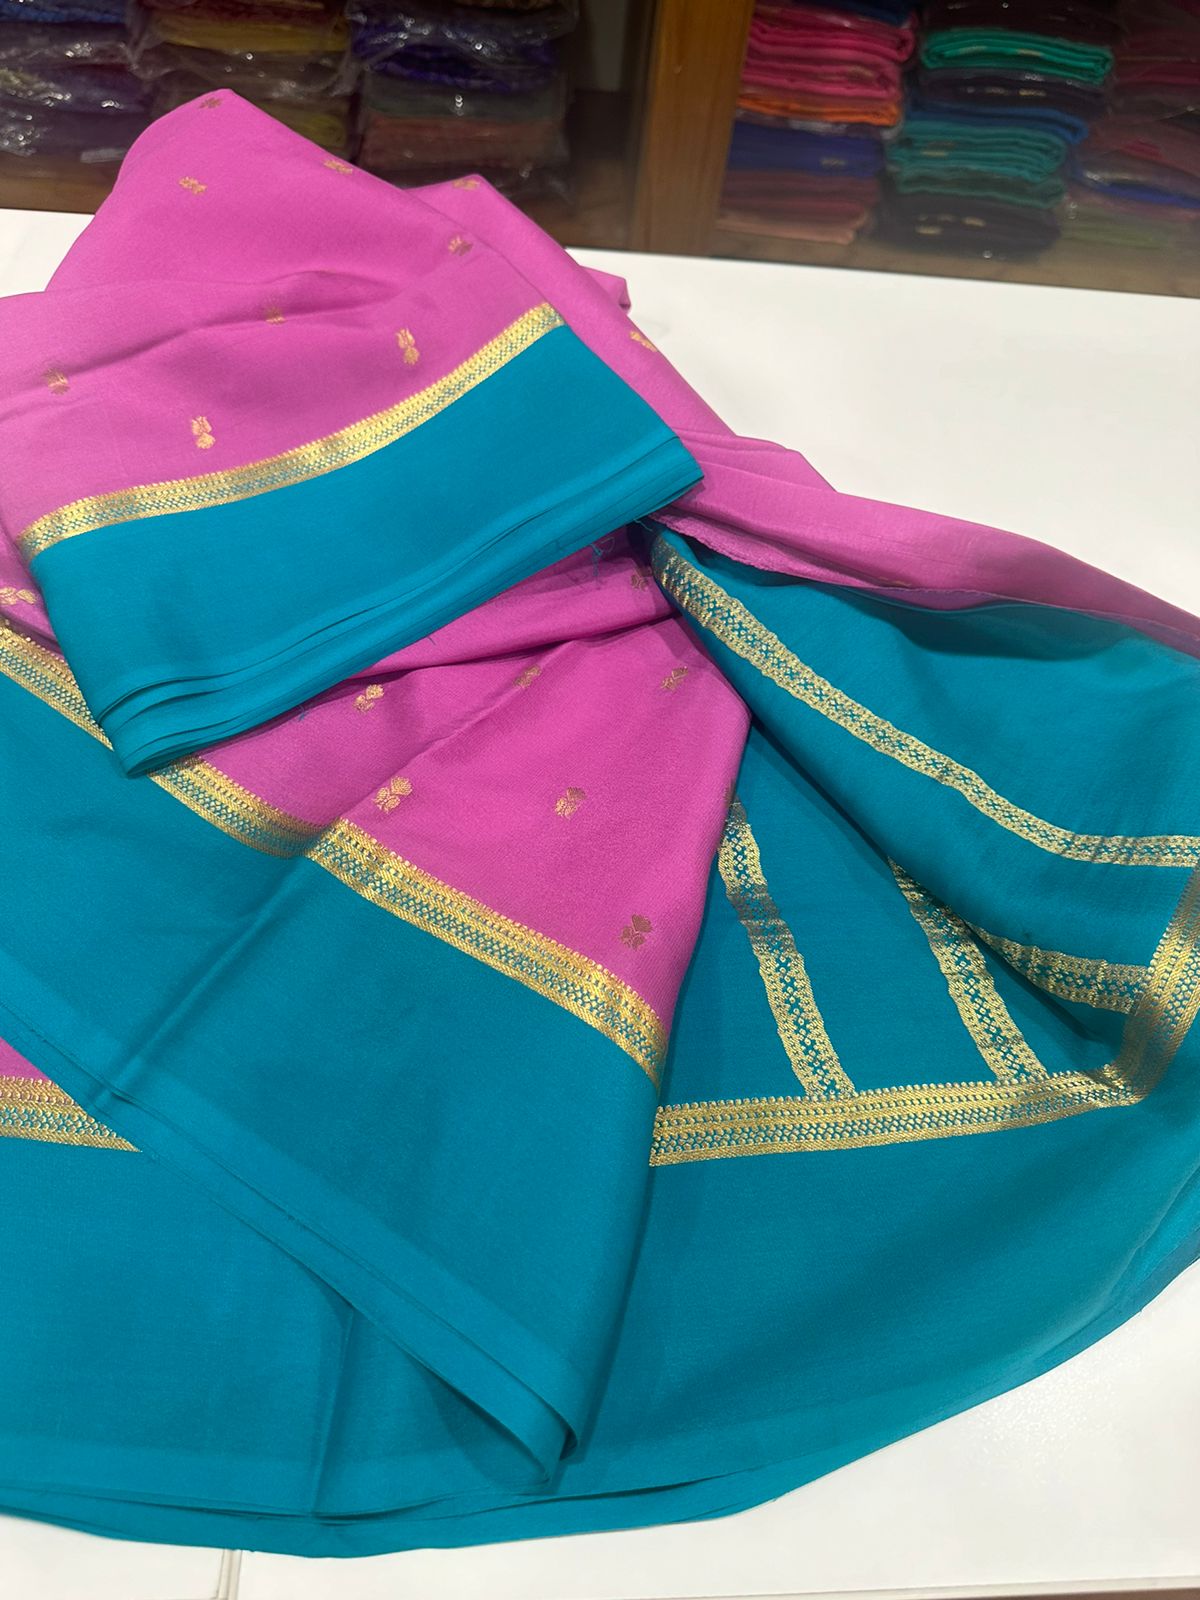 Pure Mysore silk saressTraditional borders with elegant color combinations